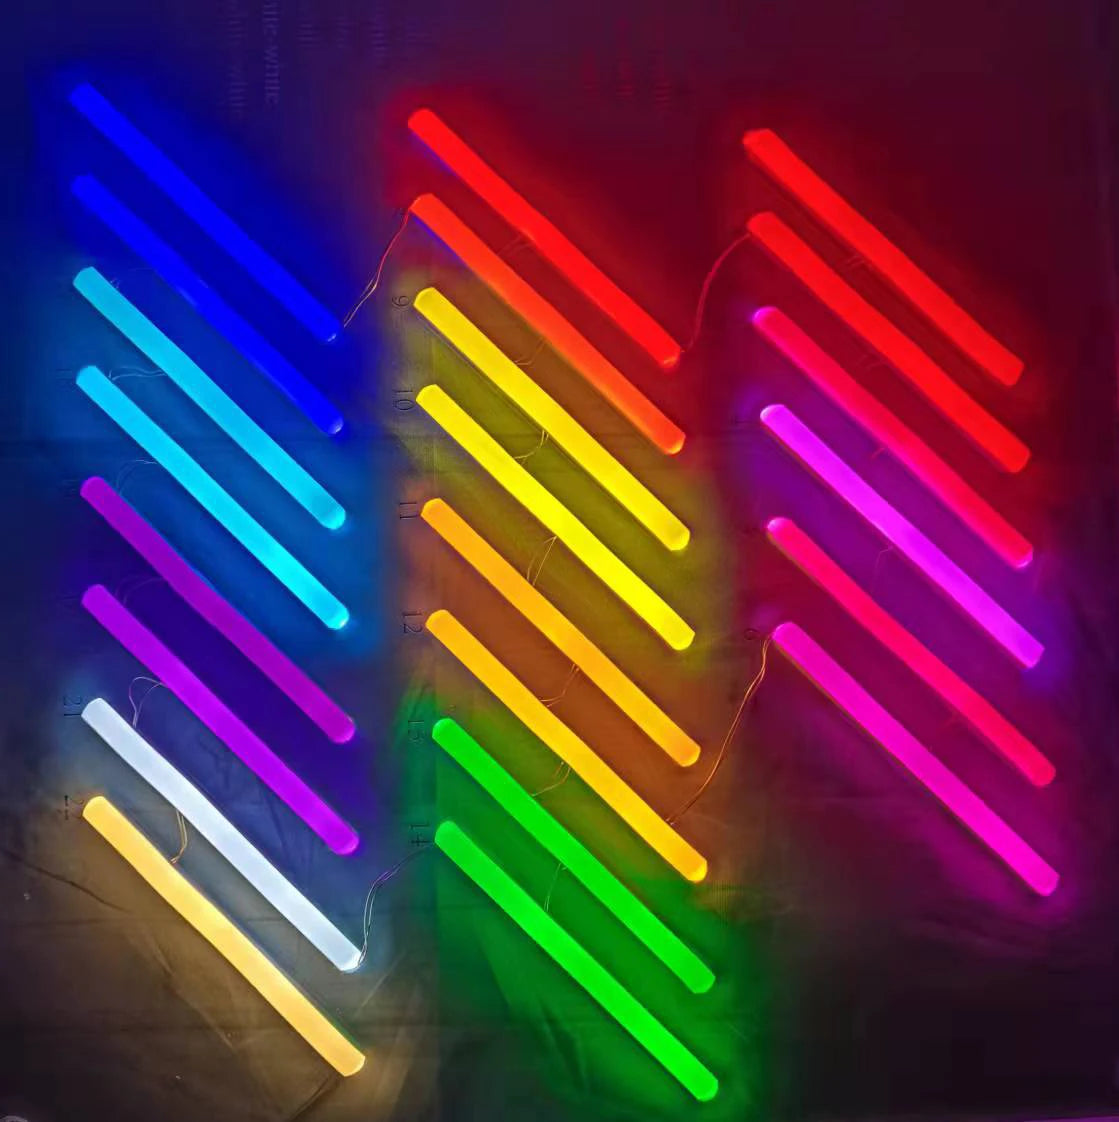 Hotsale Custom Neon Light LOVE Logo Neon Signs Wedding Party Birthday Decoration Home Wall Art Decor Gifts